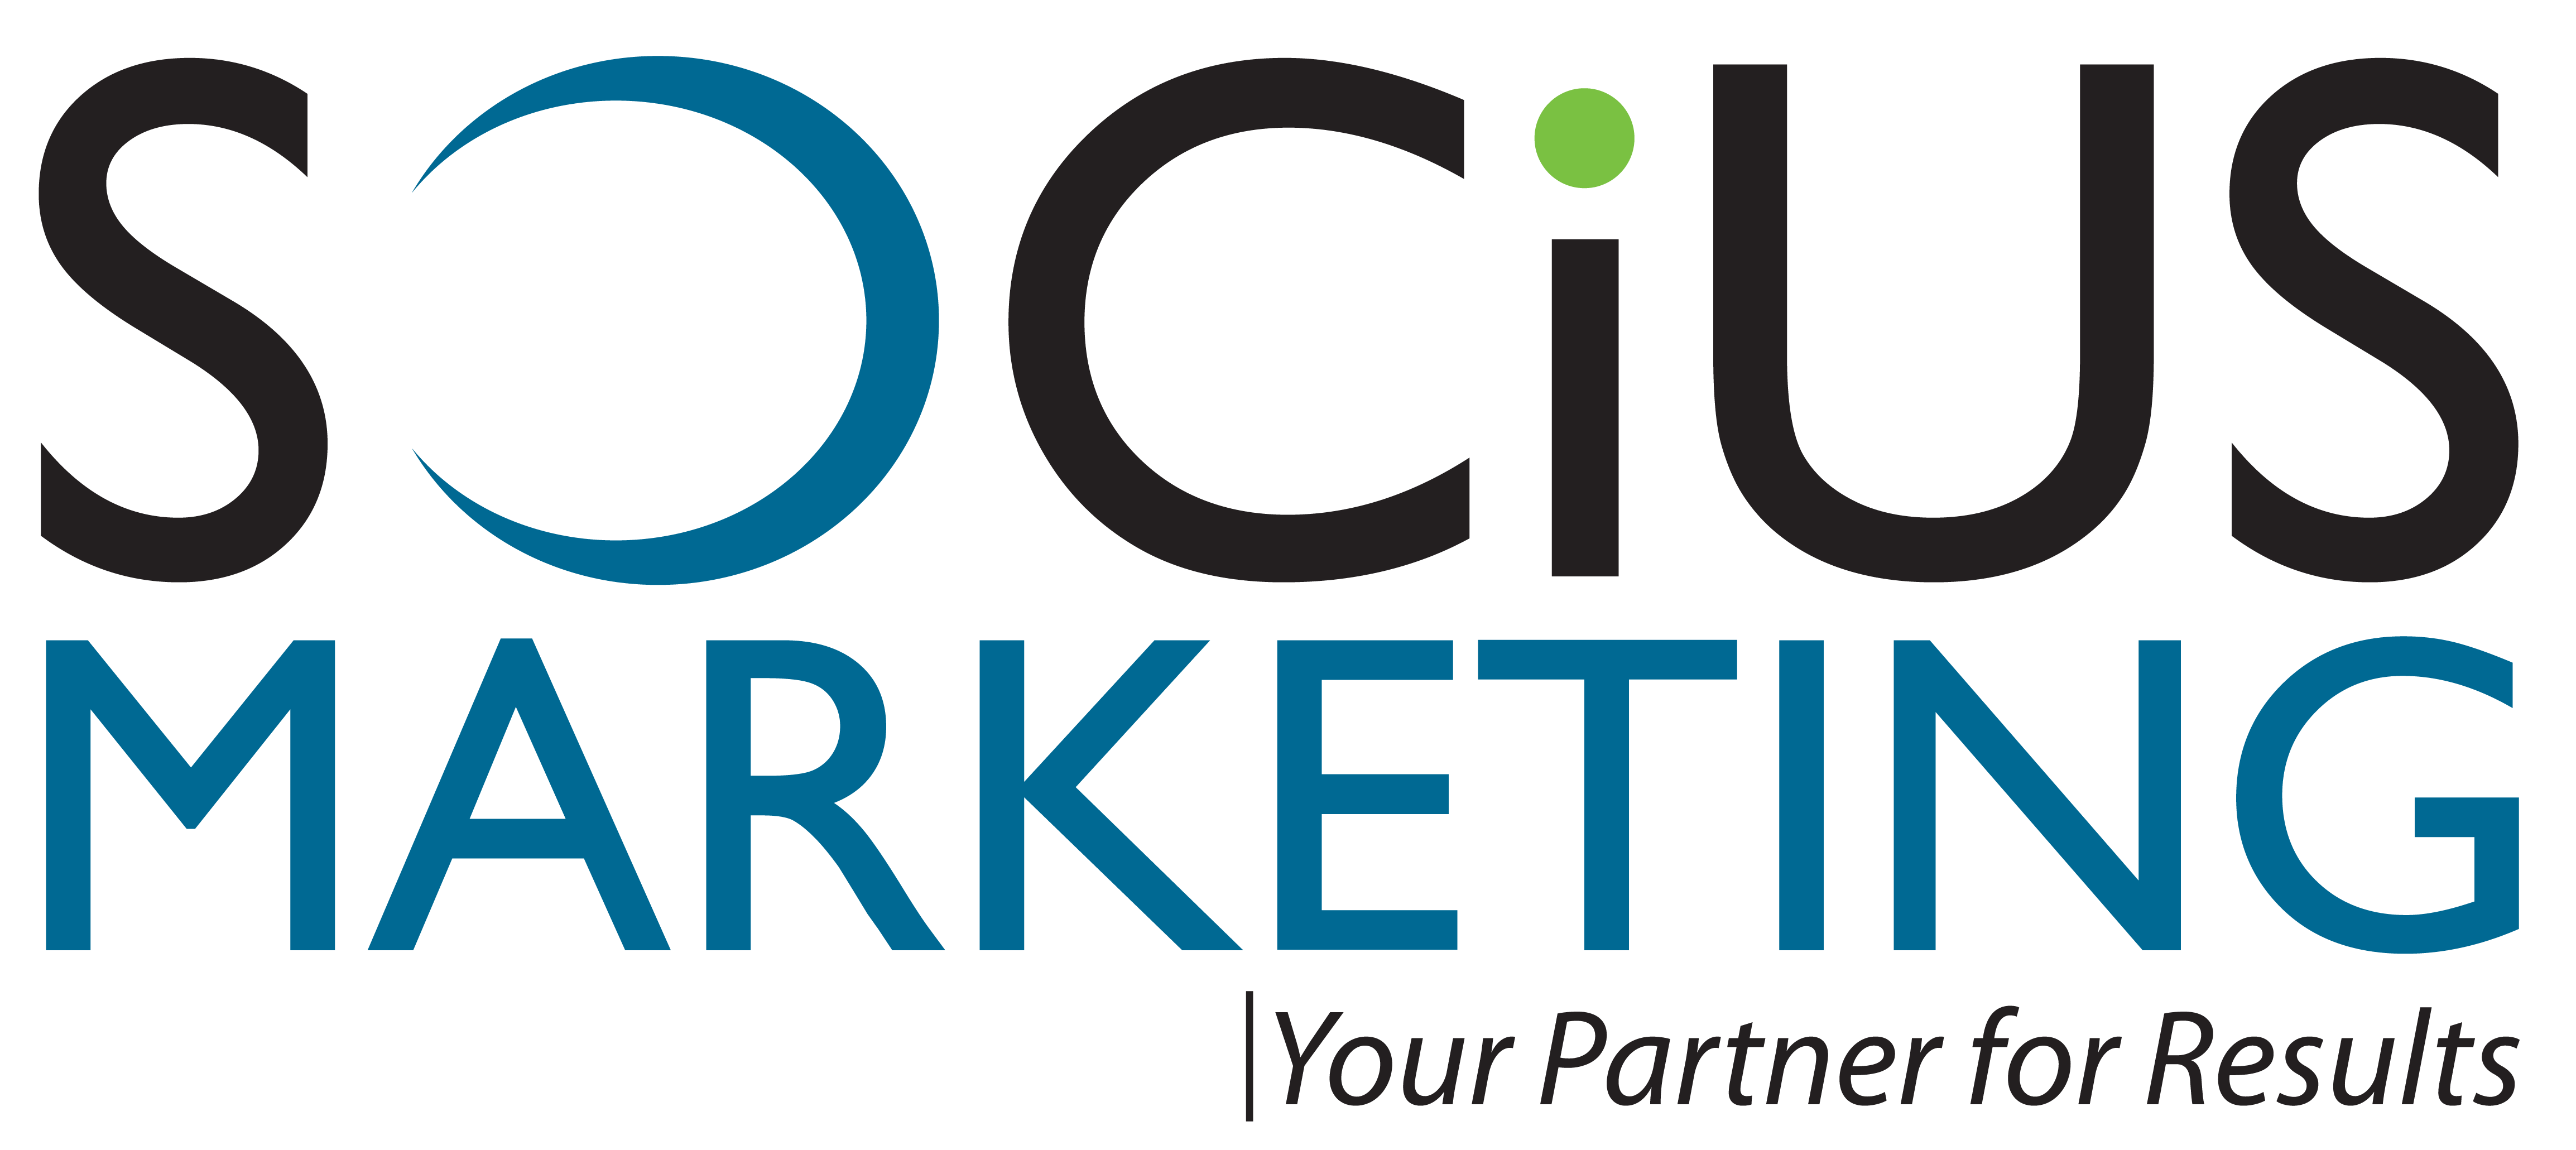 Best Remarketing Pay-Per-Click Company Logo: SociusMarketing